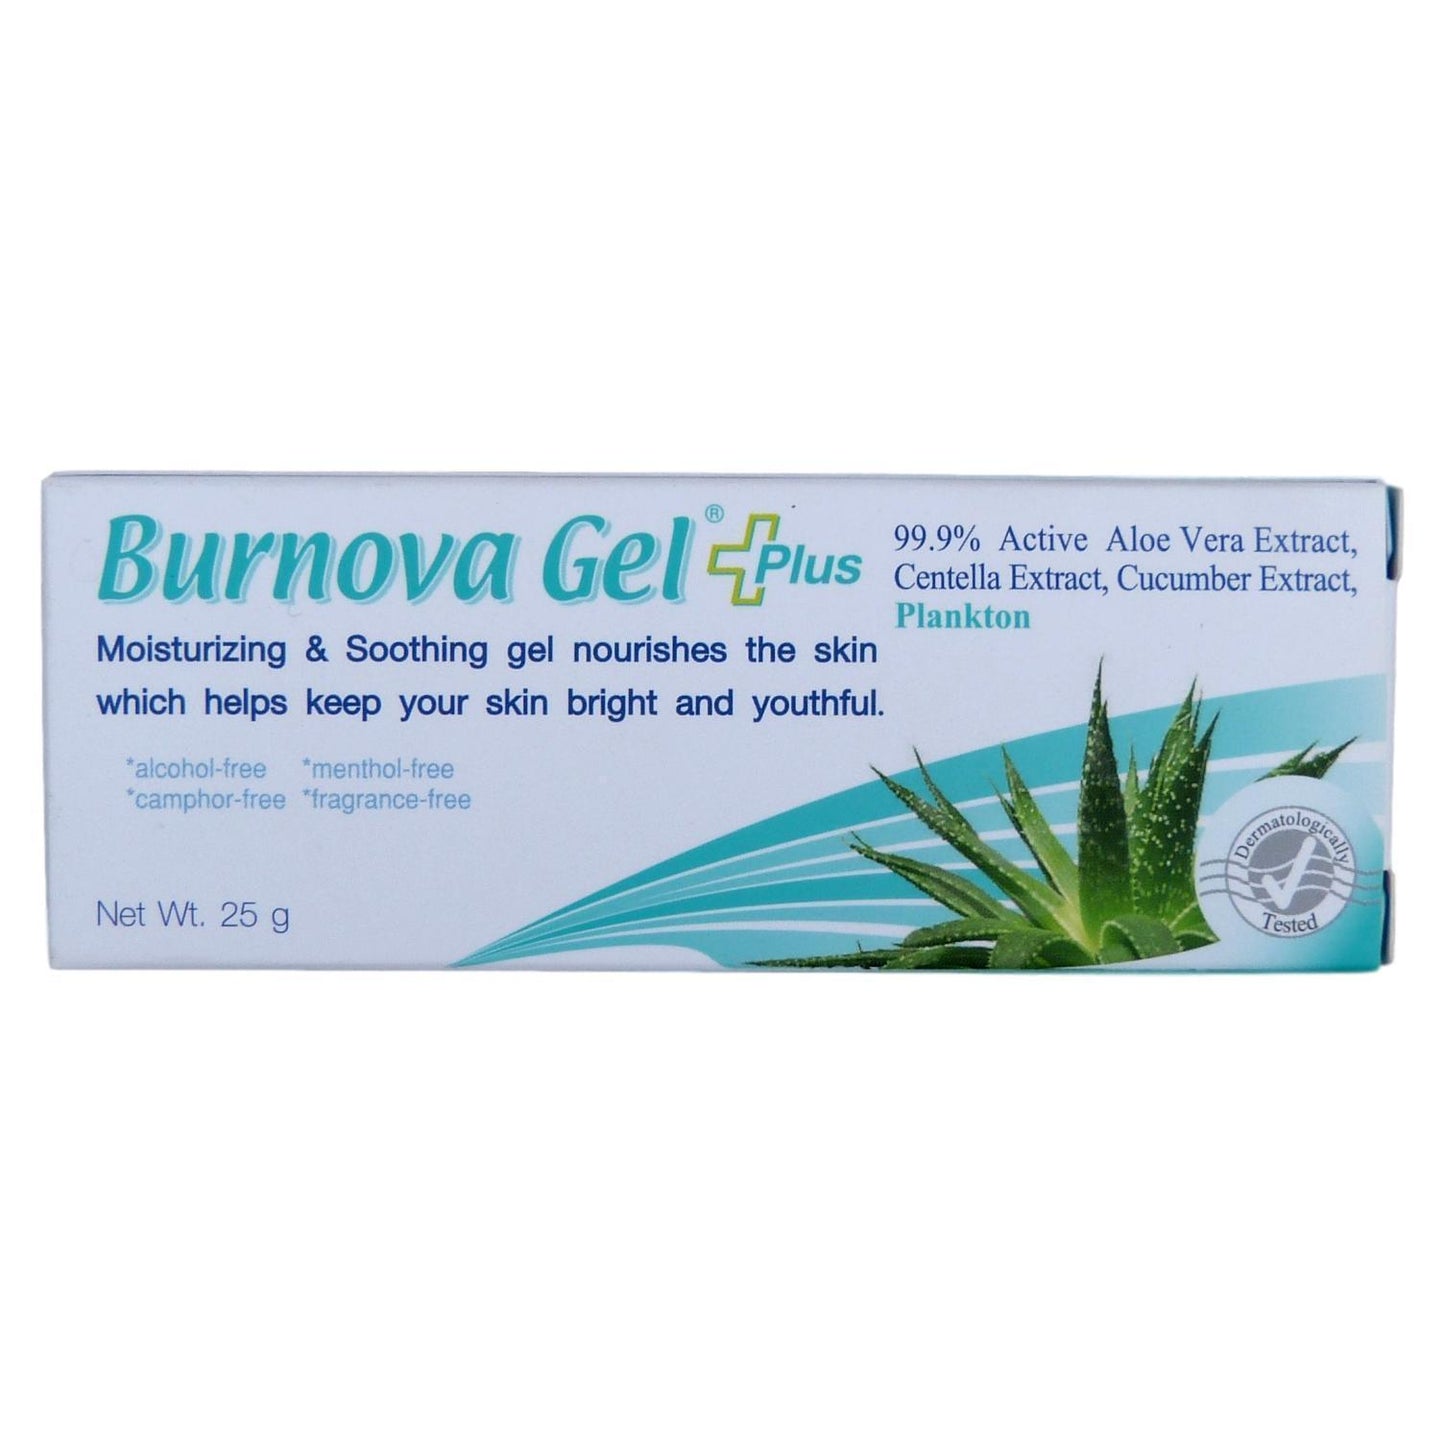 Burnova Gel Plus Aloe Vera Centella Cucumber Plankton Extract for Burns 25 grams - Asian Beauty Supply